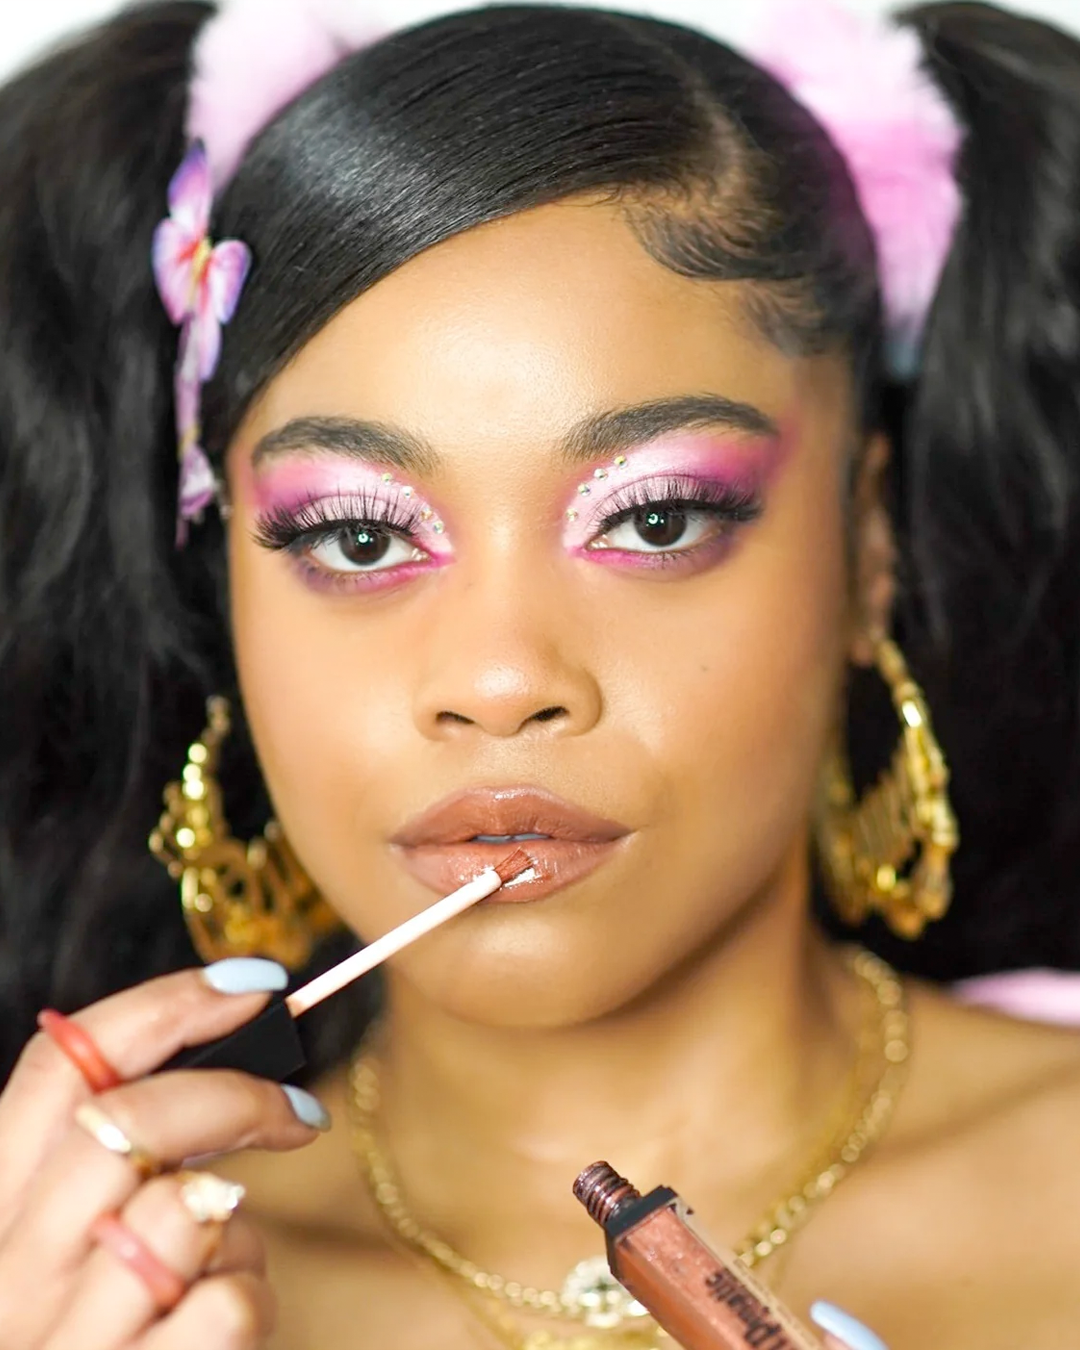 Destiny Jones wearing Honey Hustle LipShine and eyeshadow from The Graffiti Eyeshadow Palette.